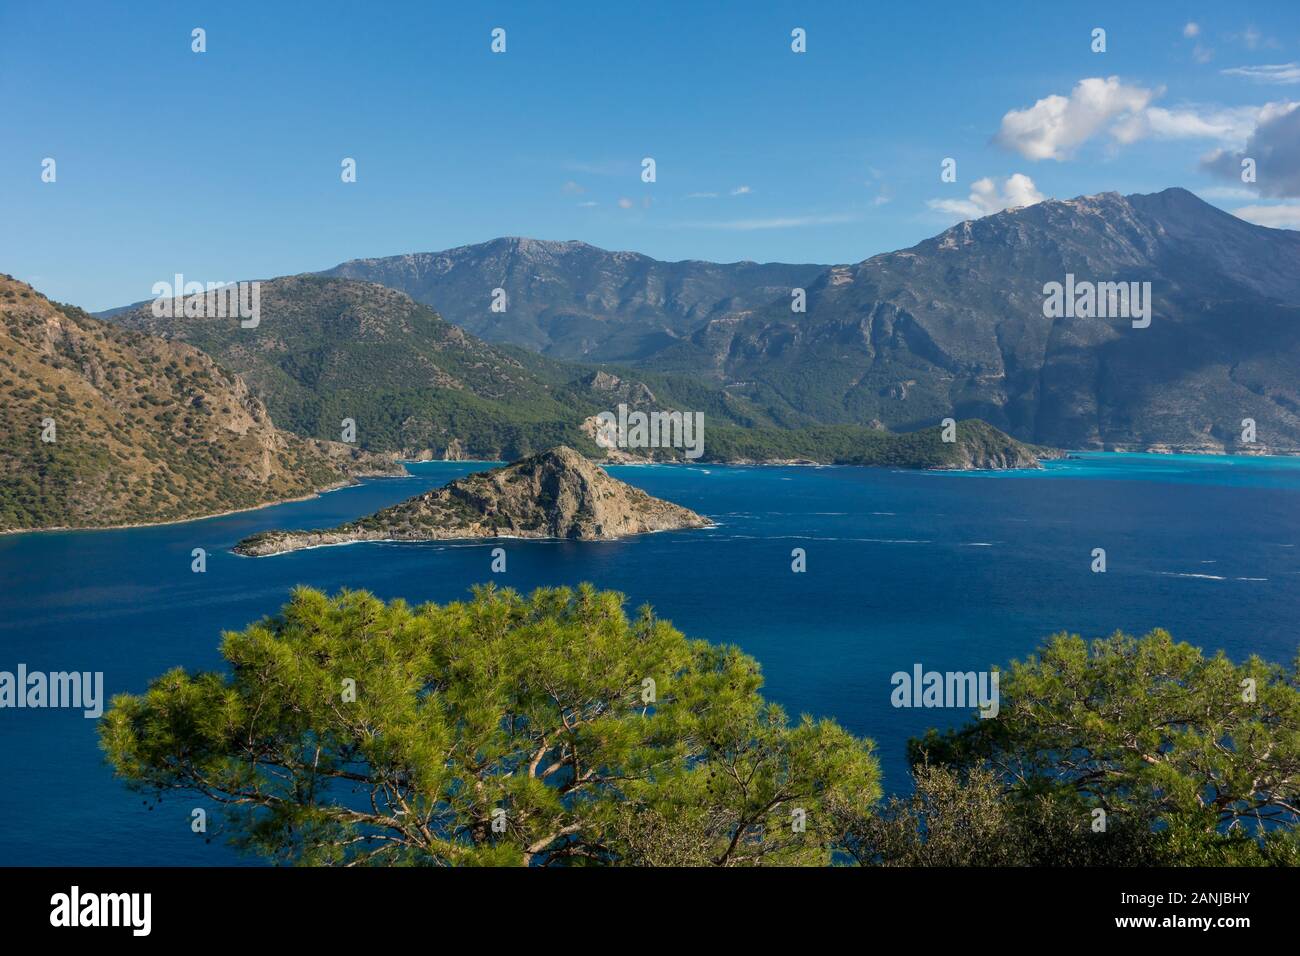 View to Gemiler Island and Babadag Mountain, Ölüdeniz, Fethiye, Aegean Turquoise coast, Anatolia, Turkey, Asia Minor, Eurasia Stock Photo